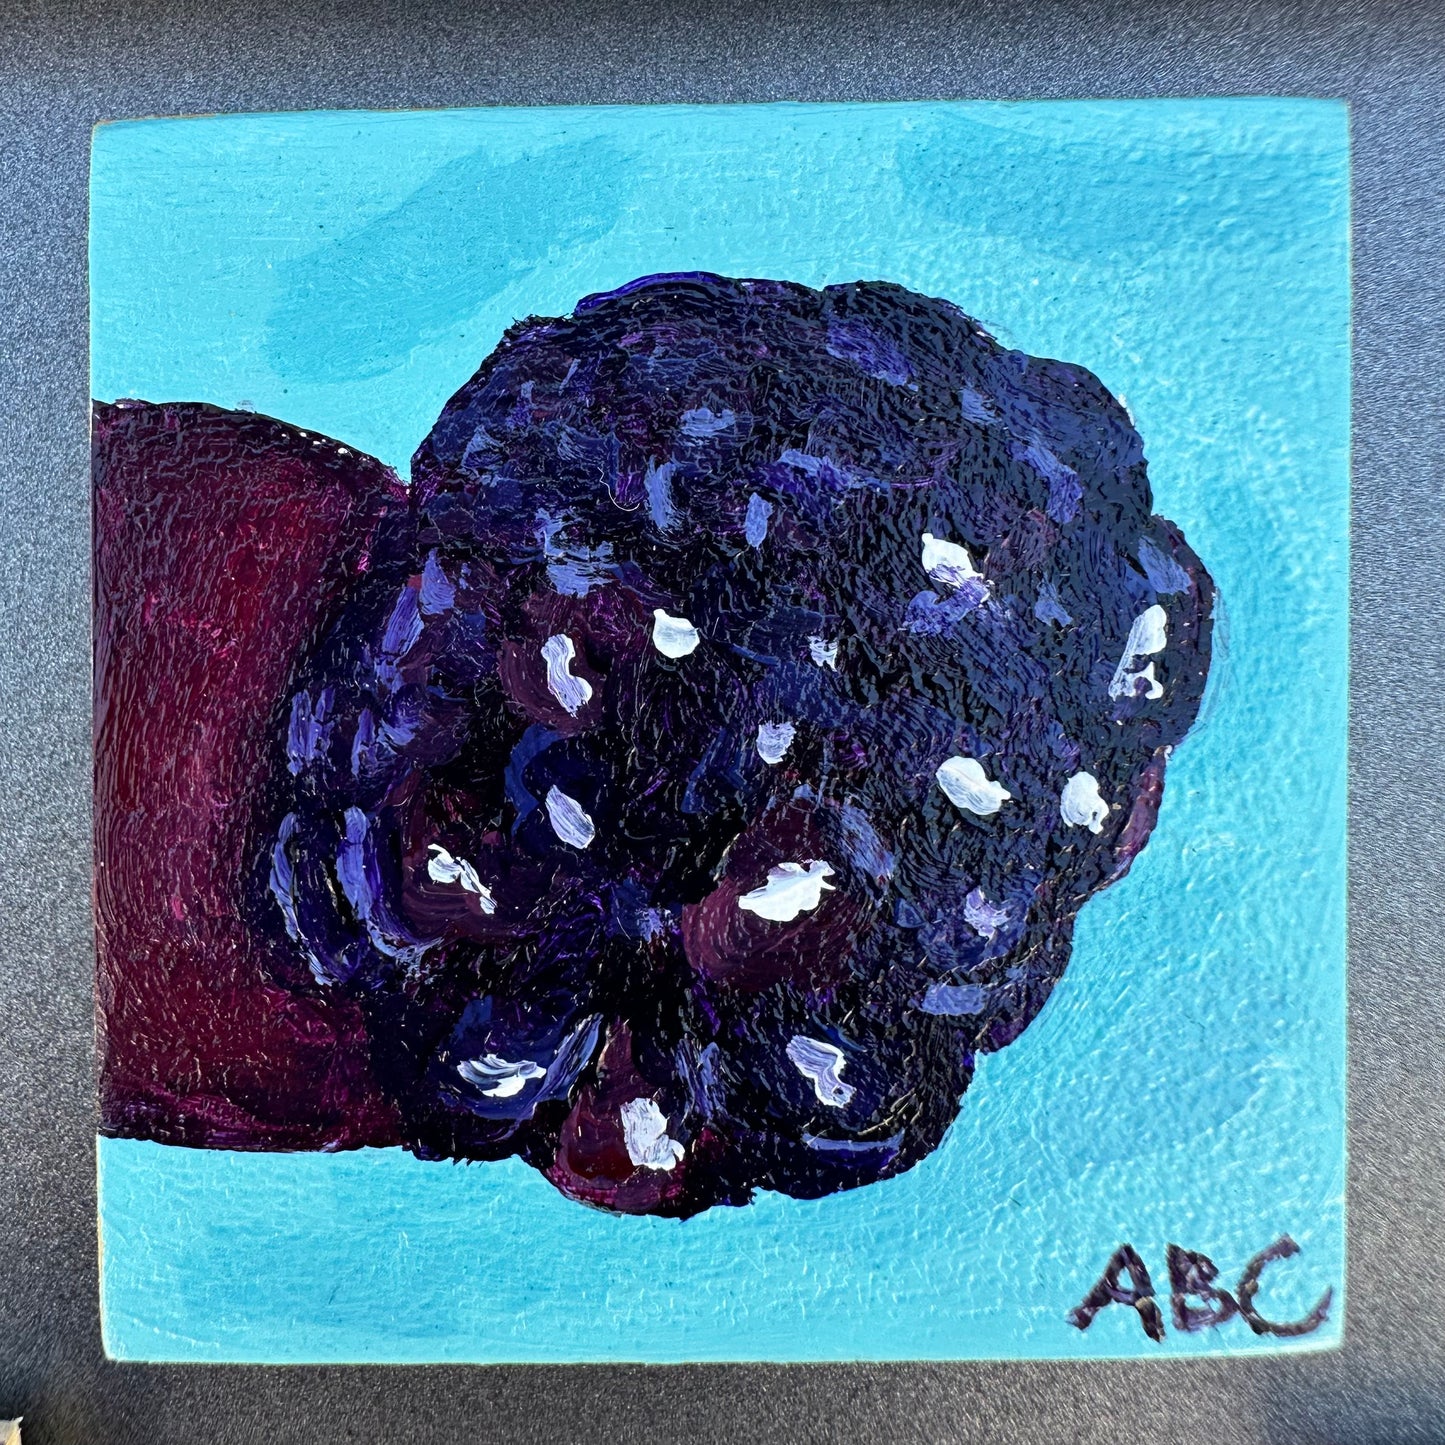 Teeny blackberry - 2x2 - oil on panel - magnet oil painting